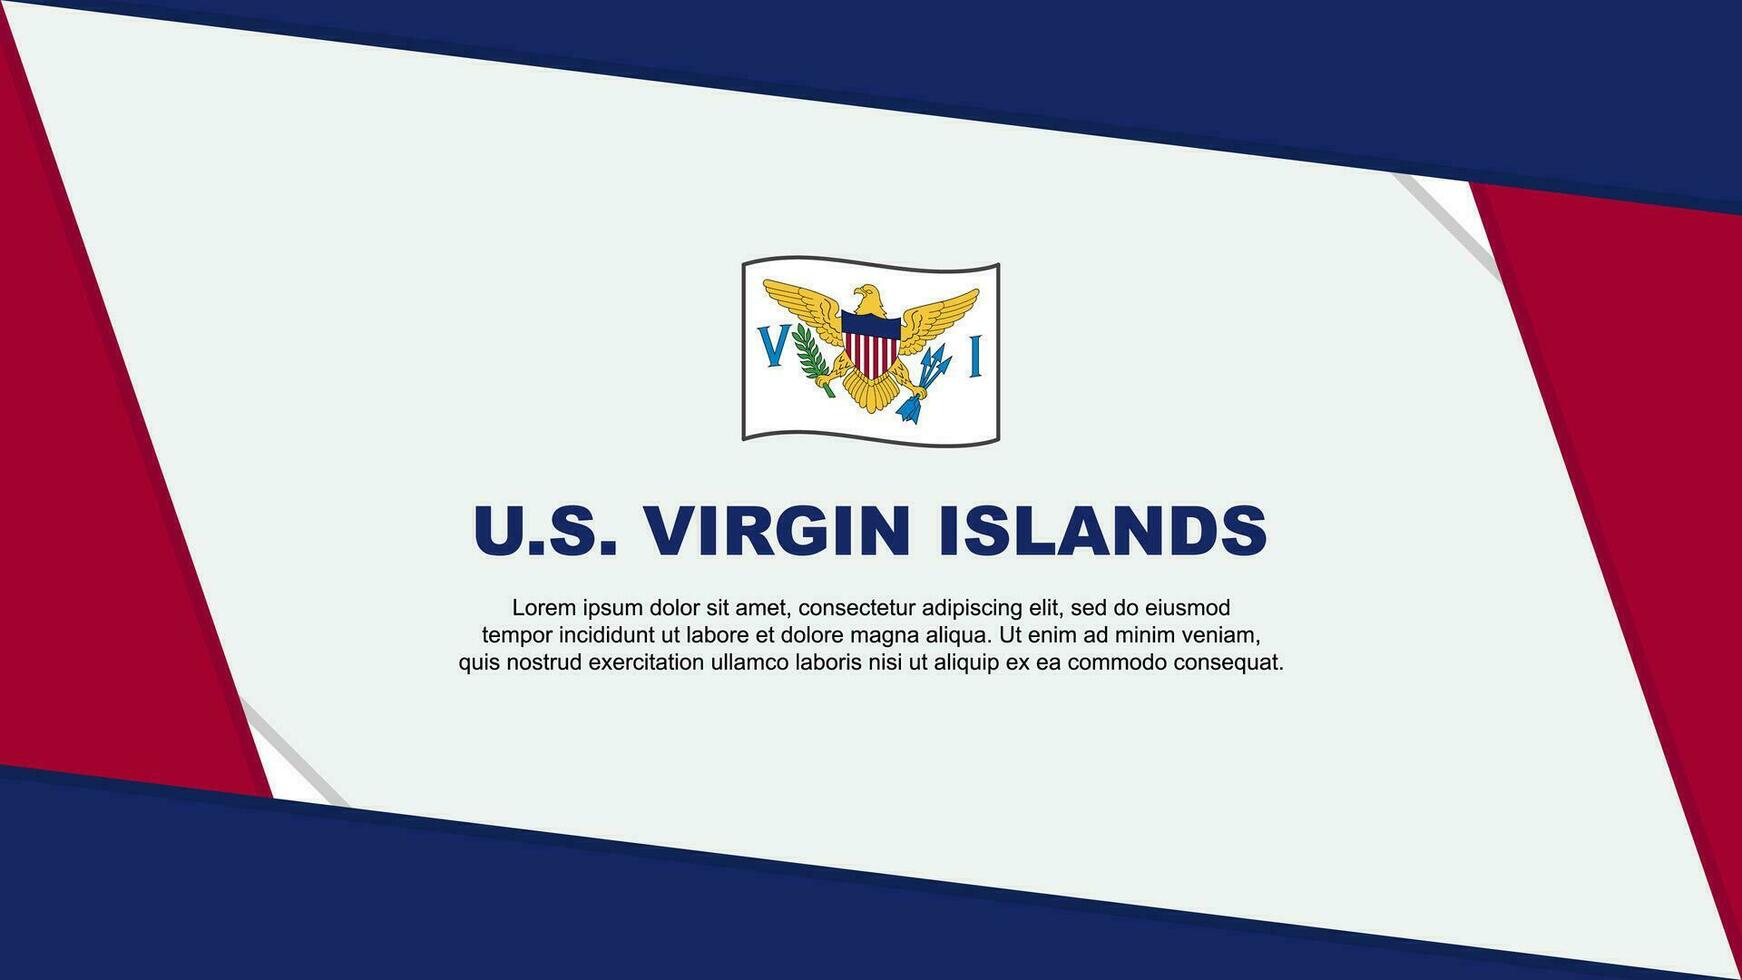 U.S. Virgin Islands Flag Abstract Background Design Template. U.S. Virgin Islands Independence Day Banner Cartoon Vector Illustration. U.S. Virgin Islands Independence Day